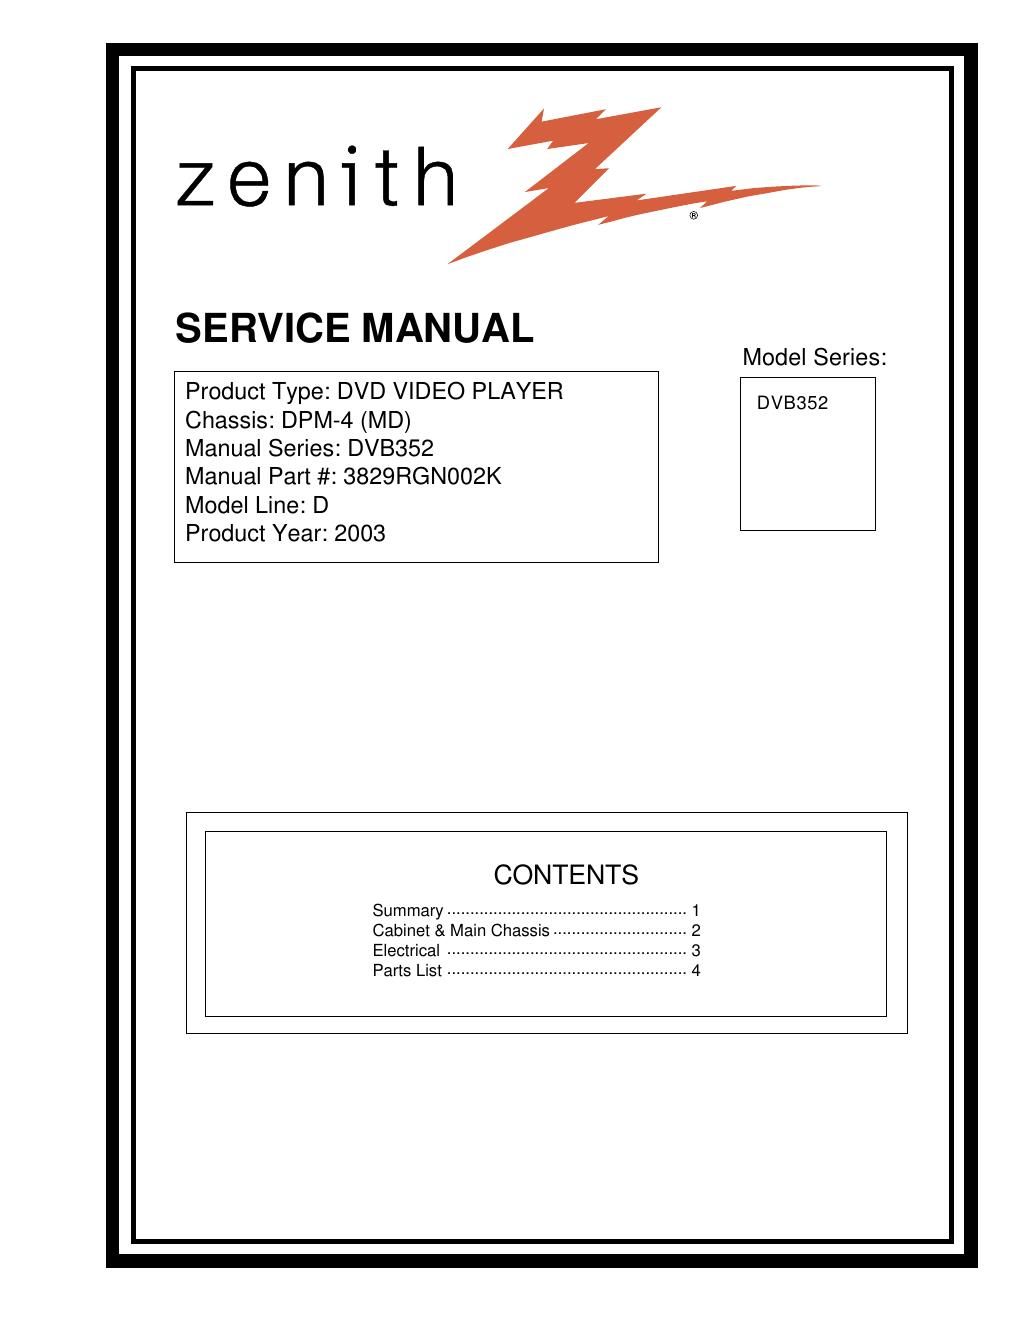 zenith dvb 352 service